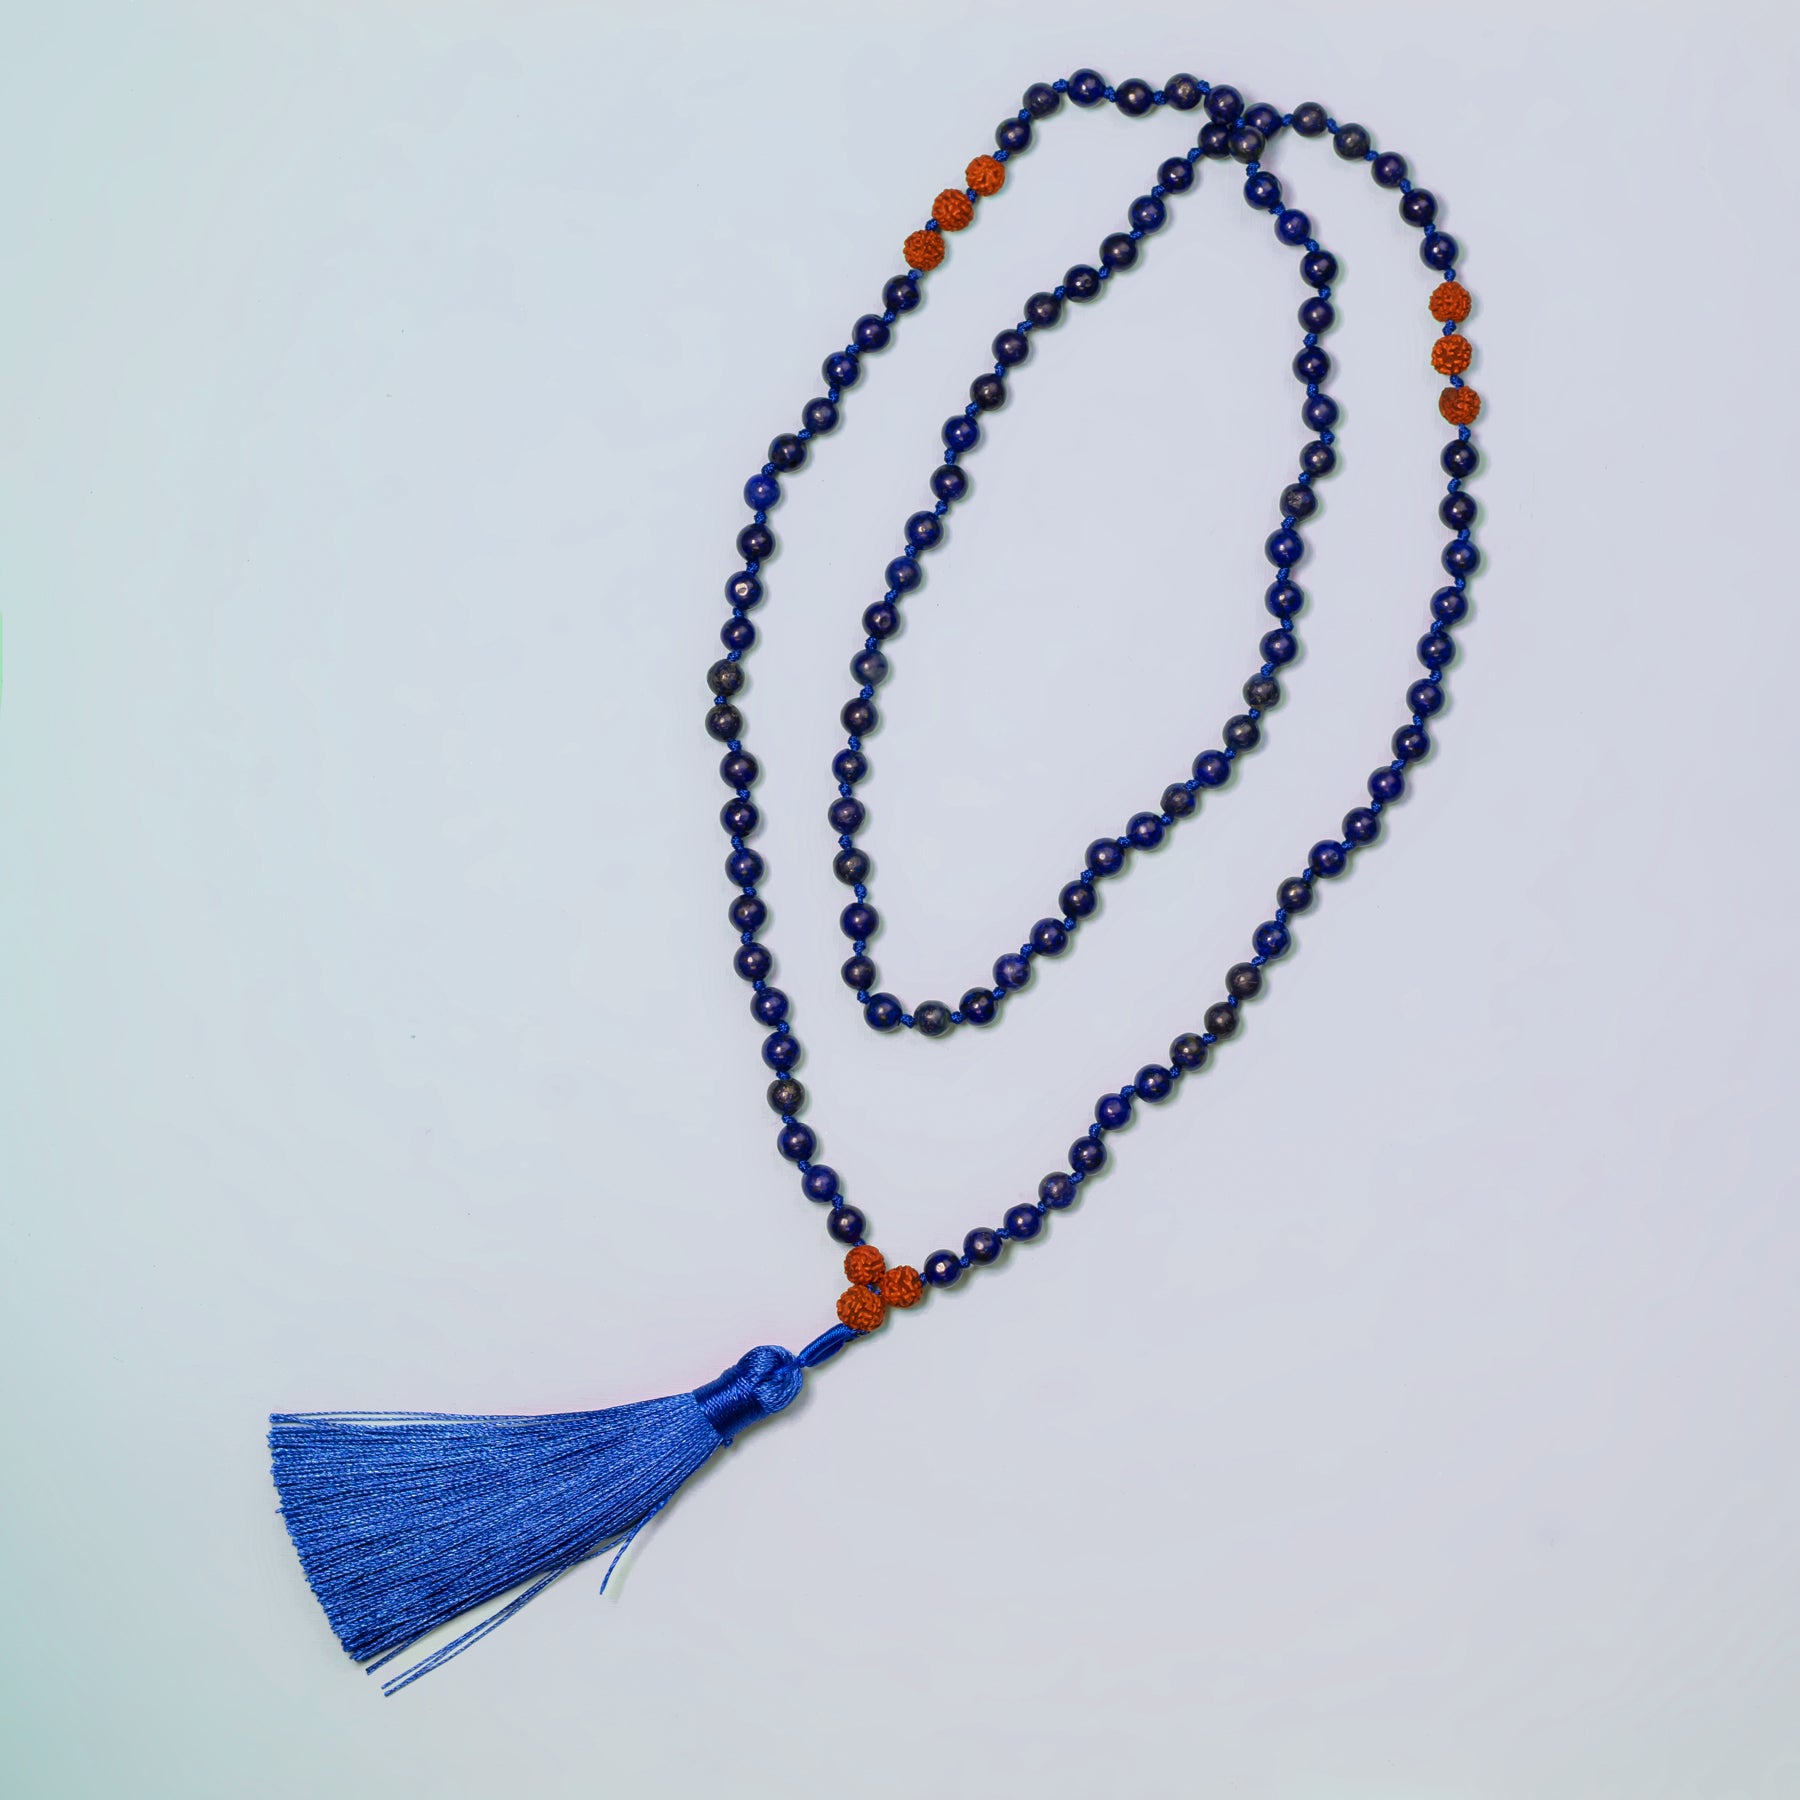 Natural lapis lazuli mala necklace with silk tassel